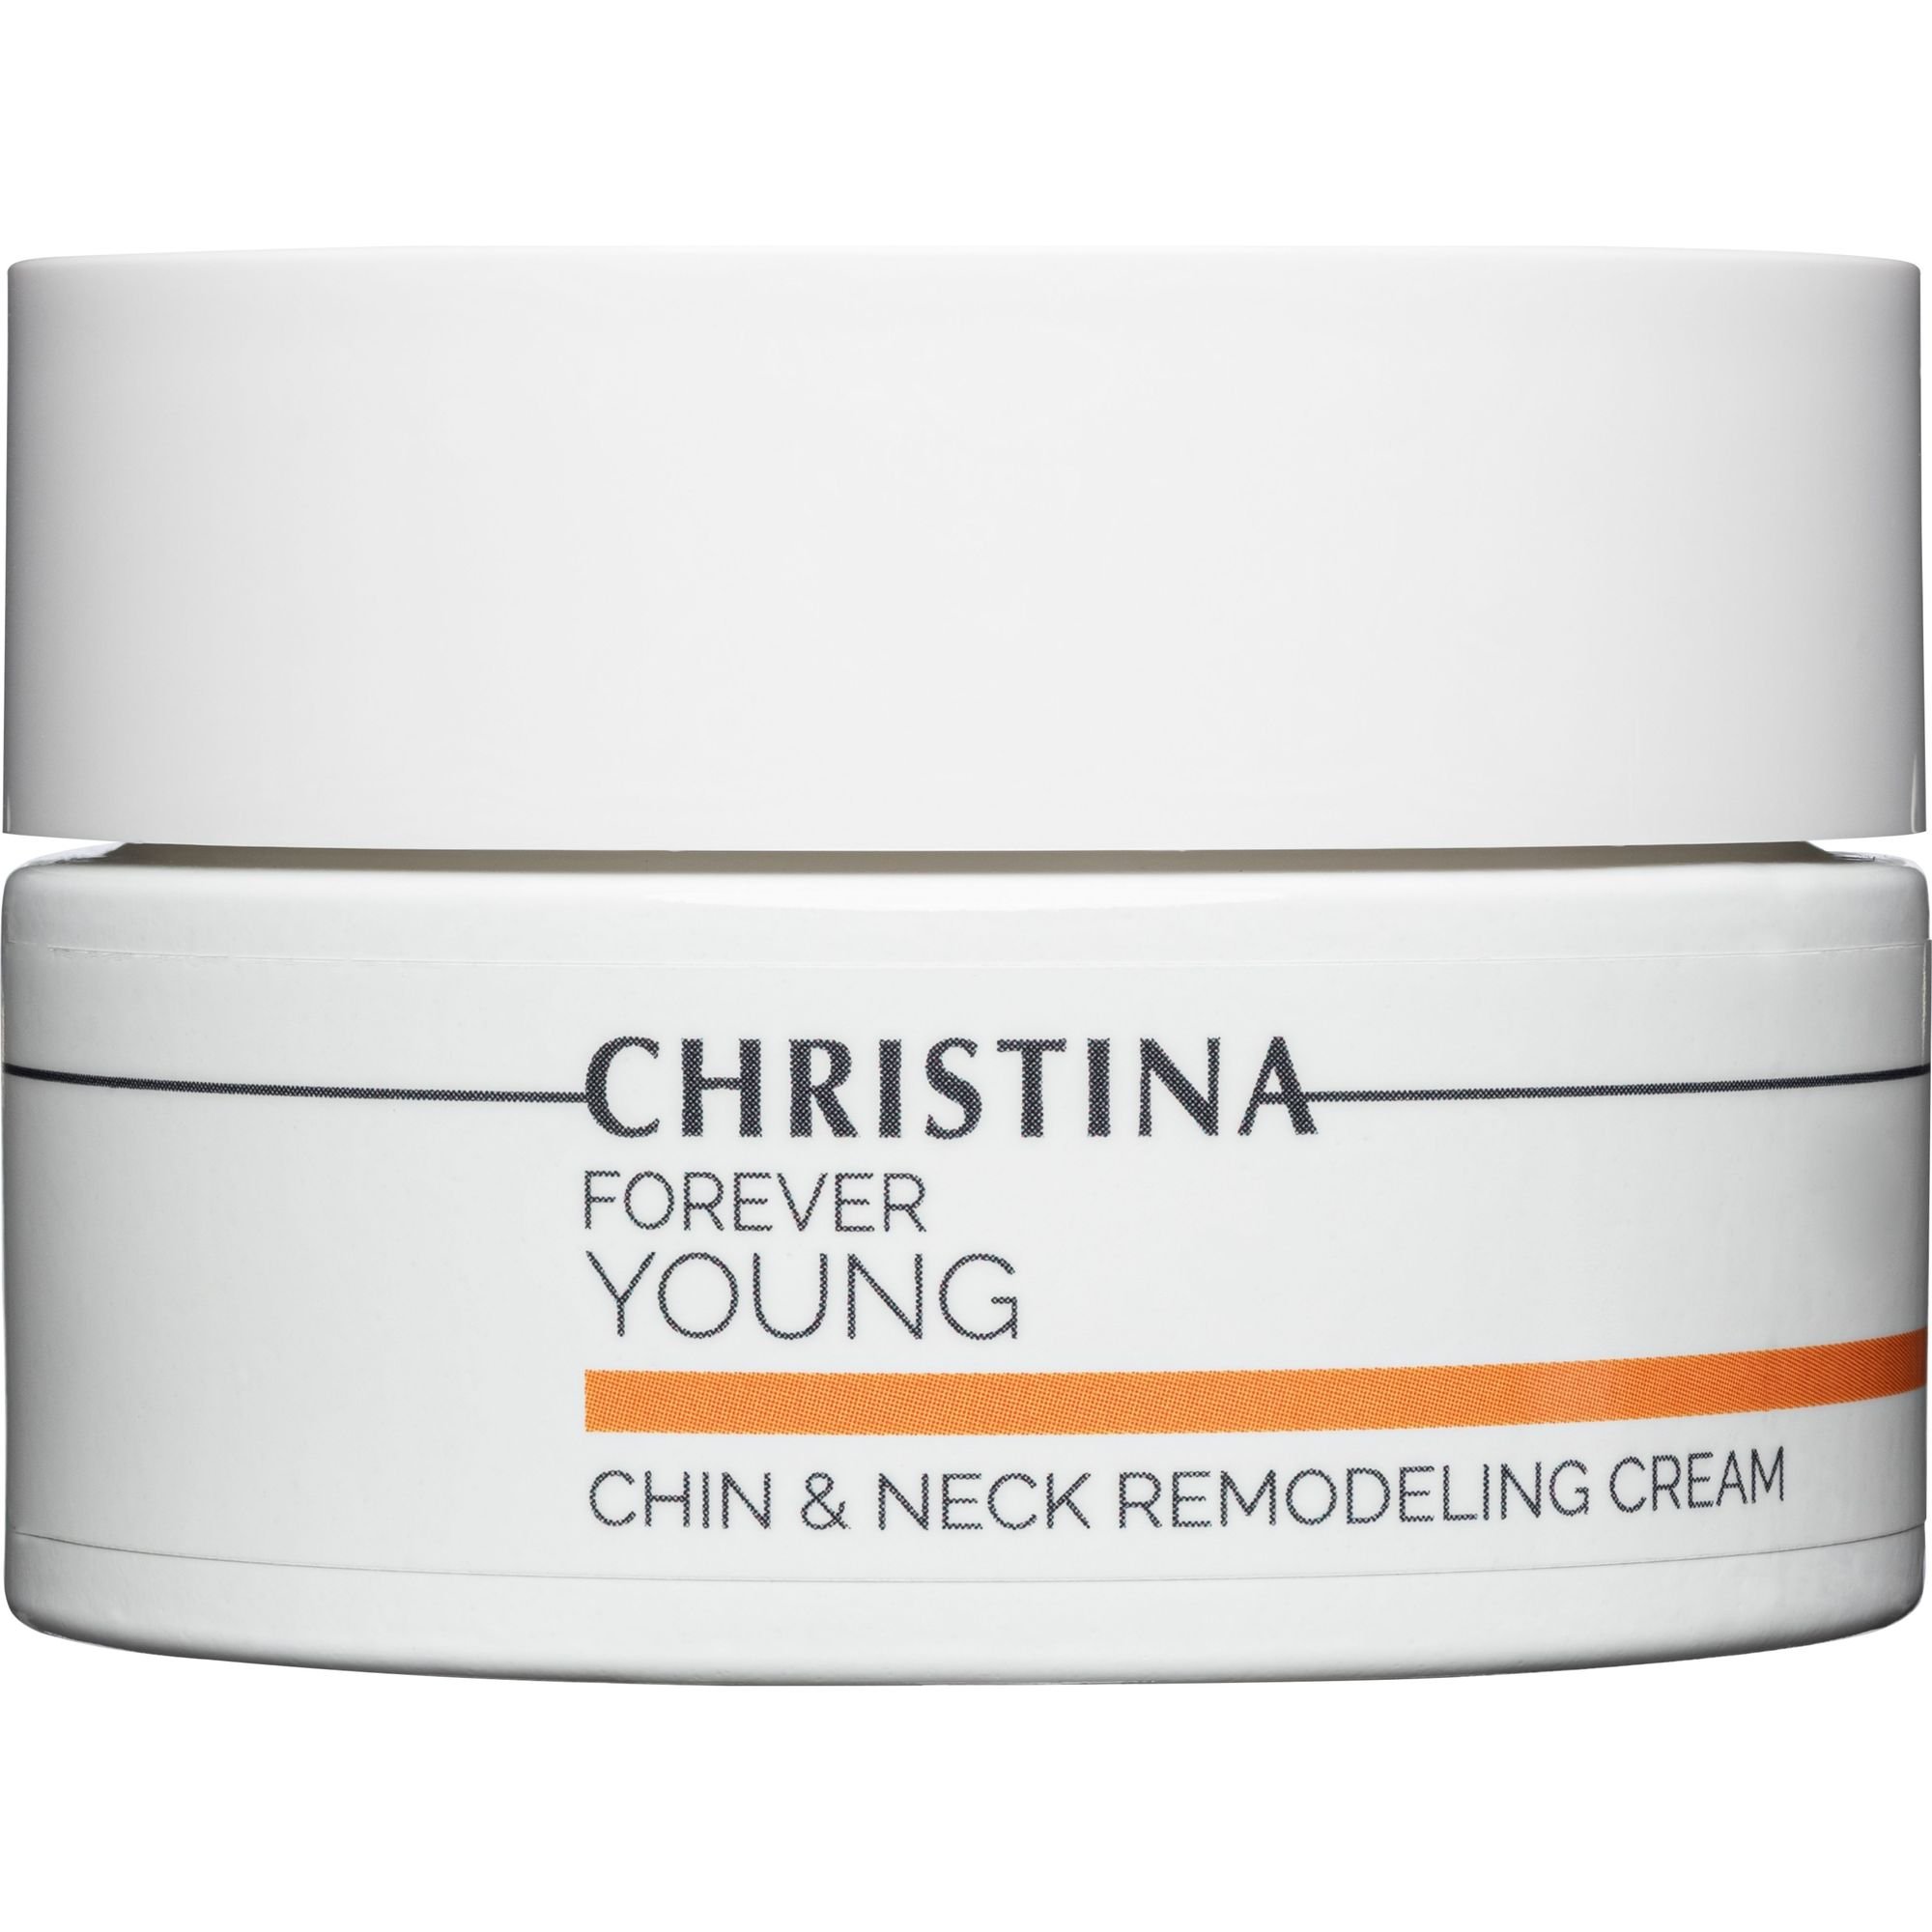 Ремоделюючий крем Christina Forever Young Chin & Neck Remodeling Cream 50 мл - фото 1